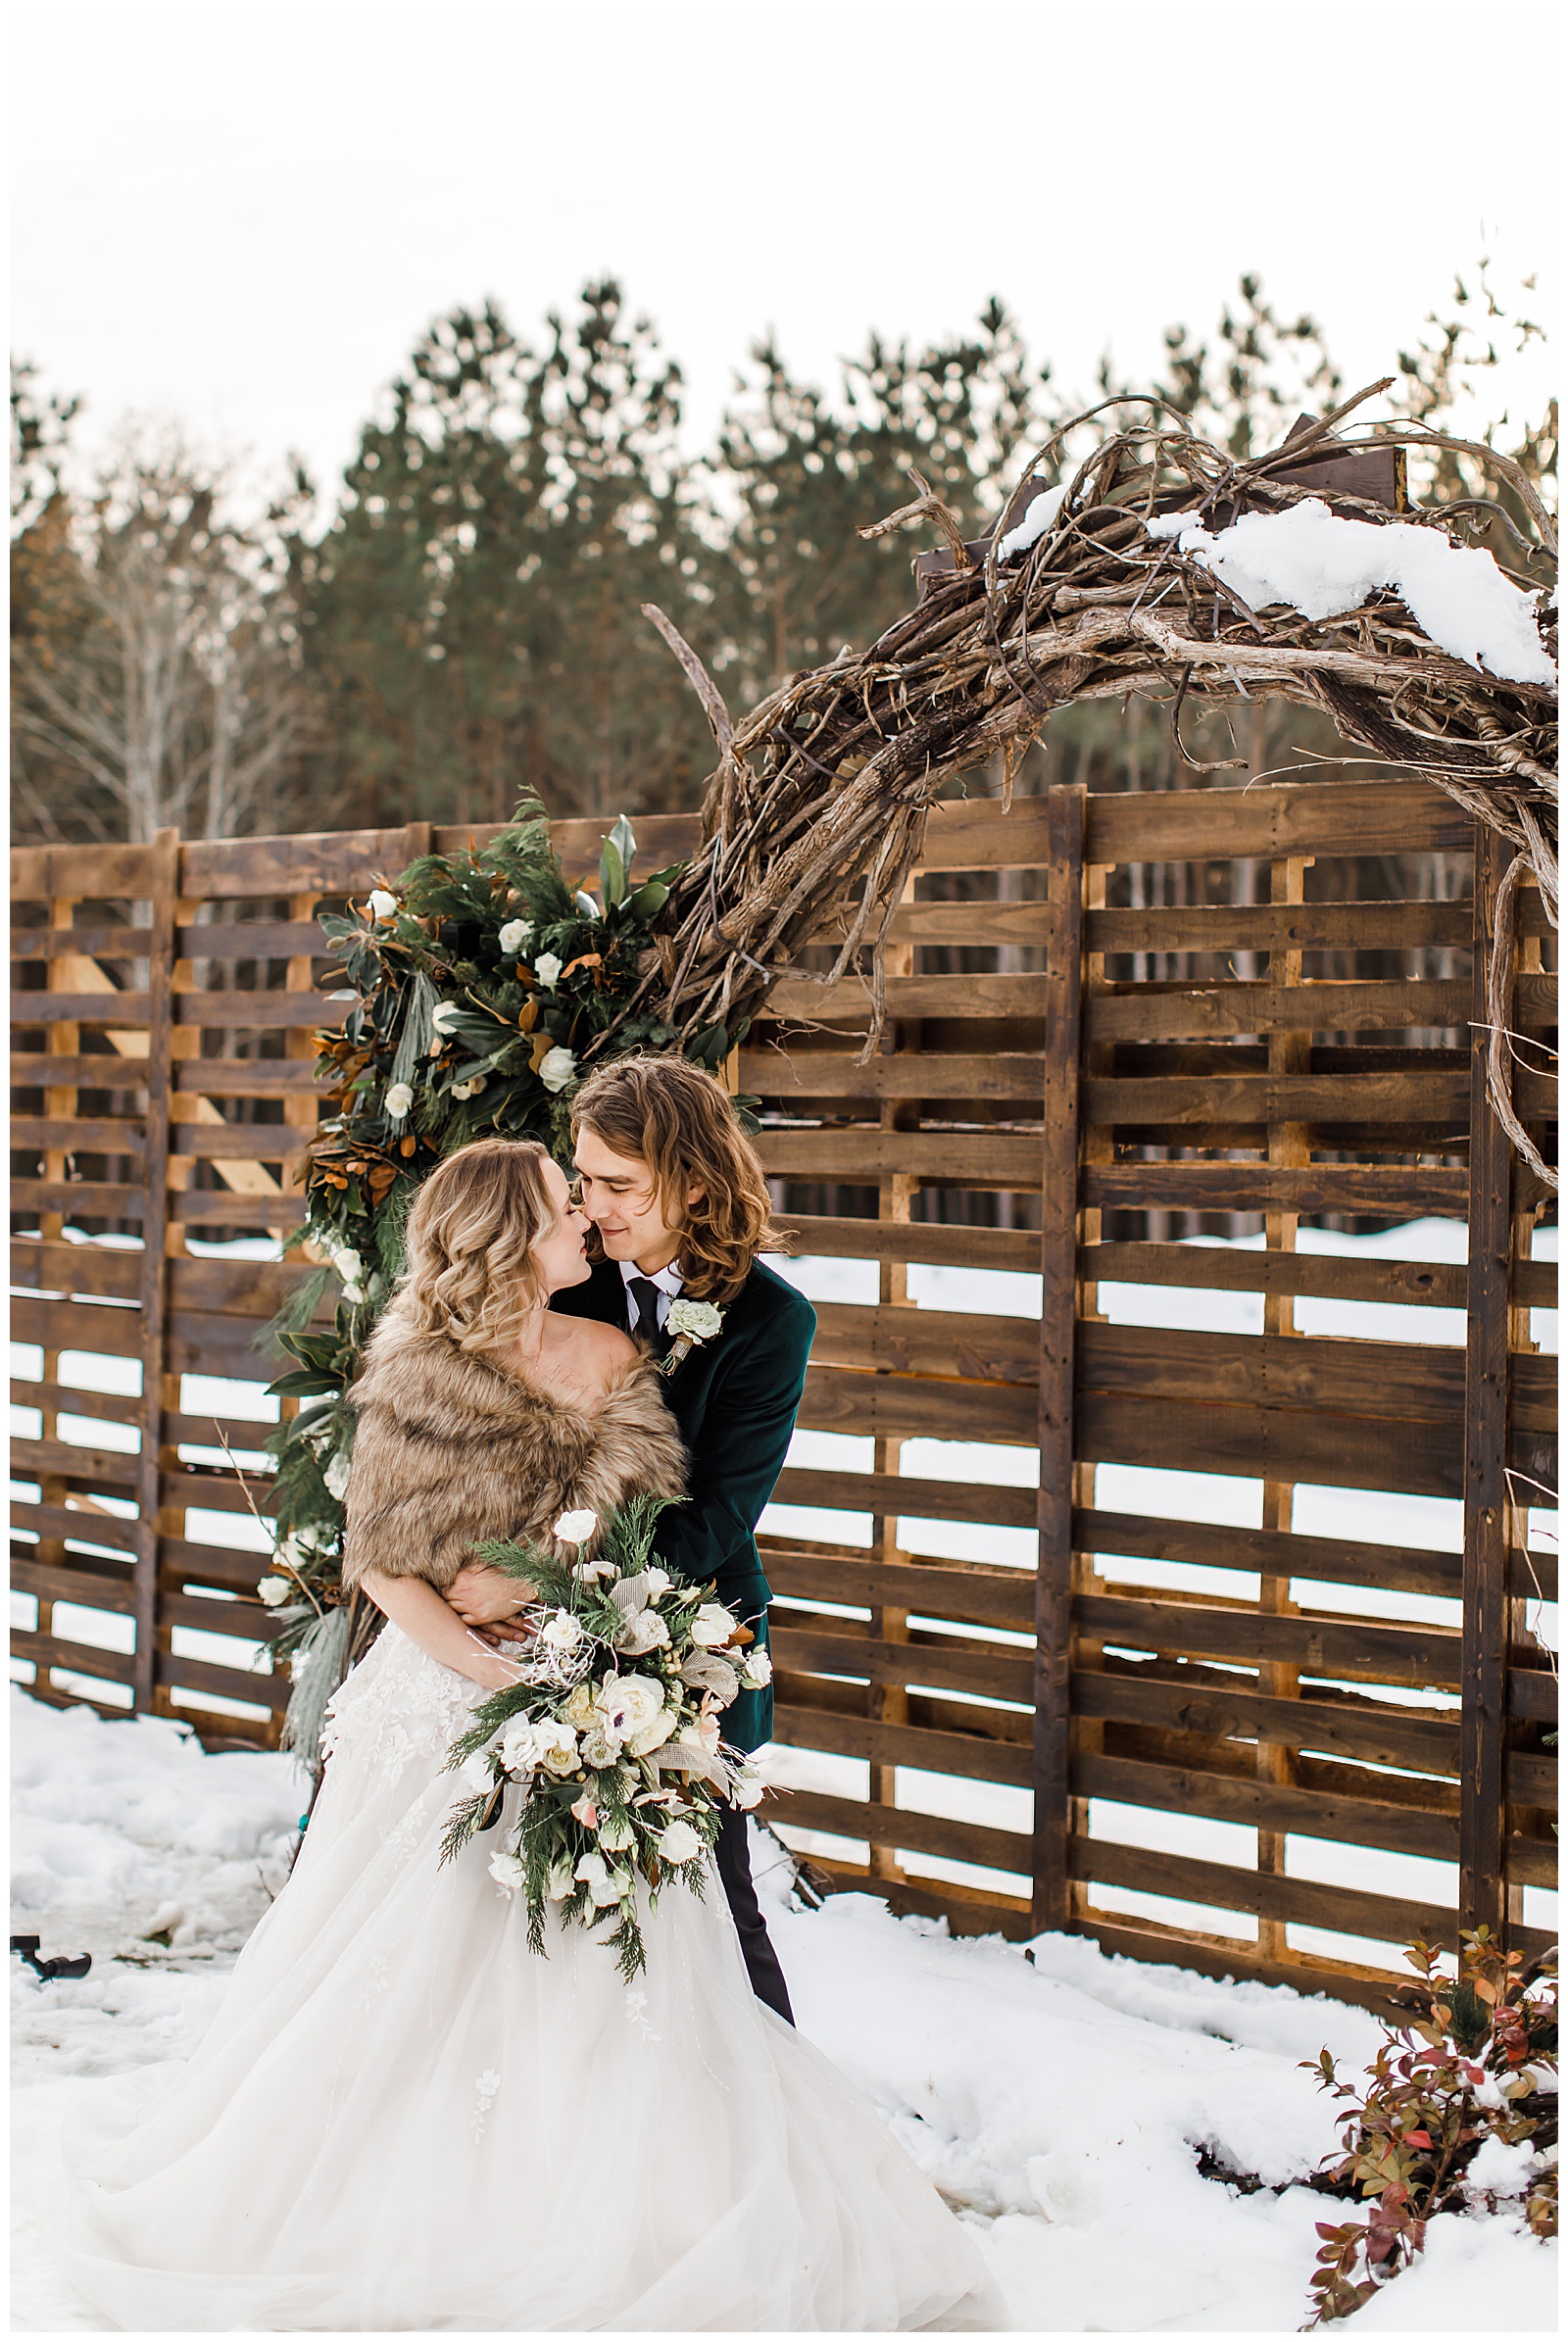 antebellum-of-new-kent-winter-wedding-inspiration-ch-sh-fredericks-photography_0036.jpg